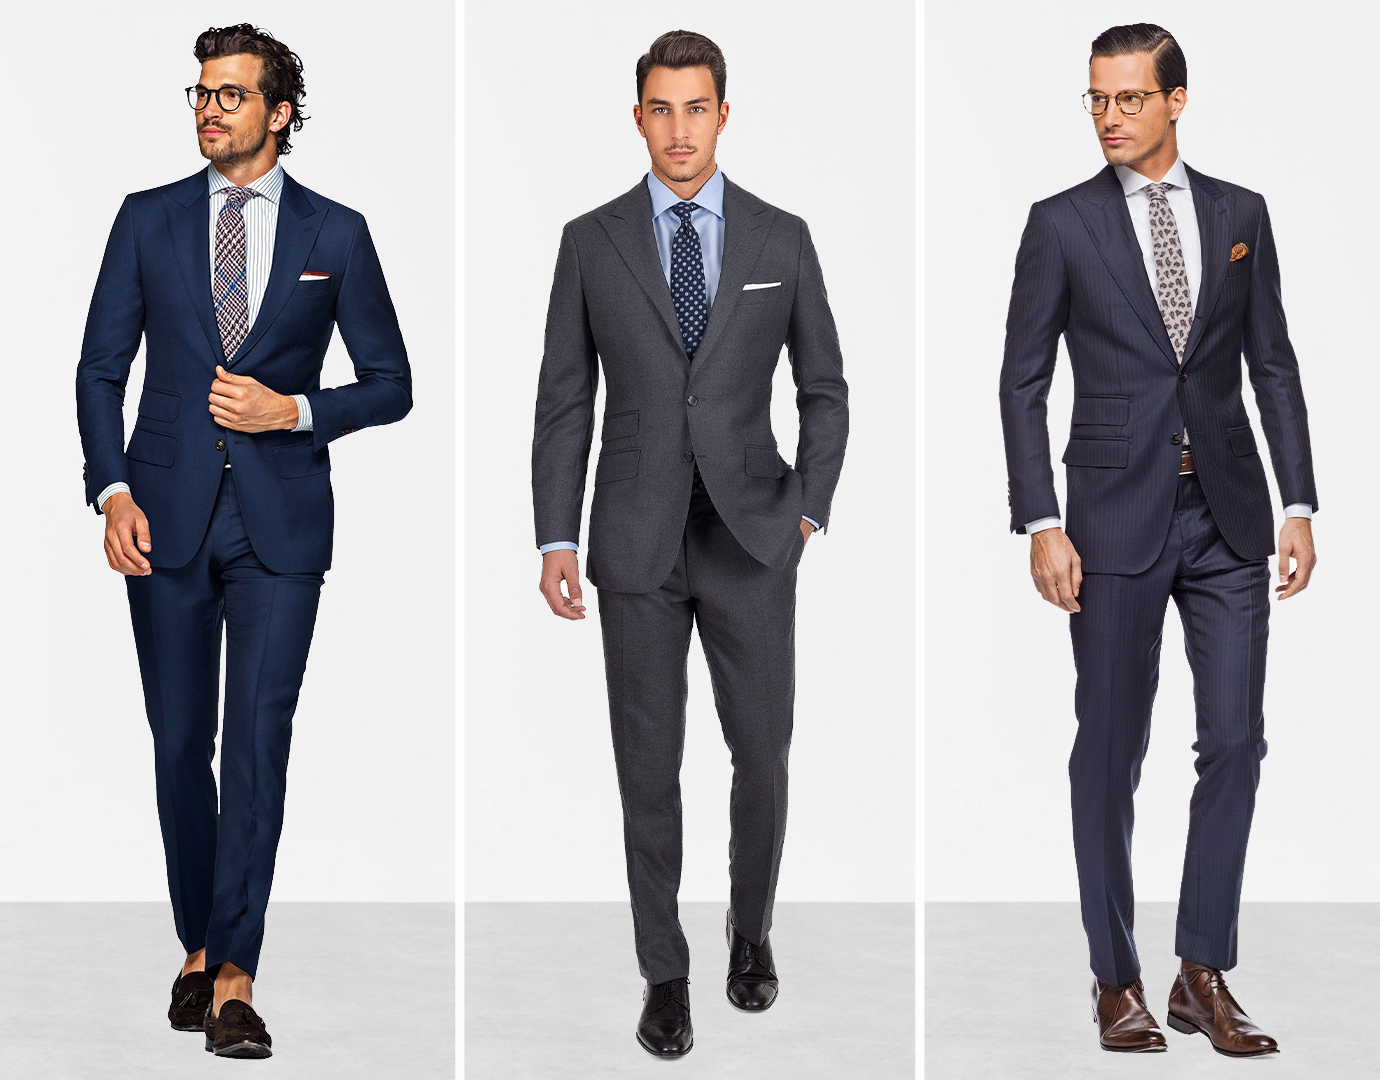 SemiFormal Dress Code Attire For Men Suits Expert